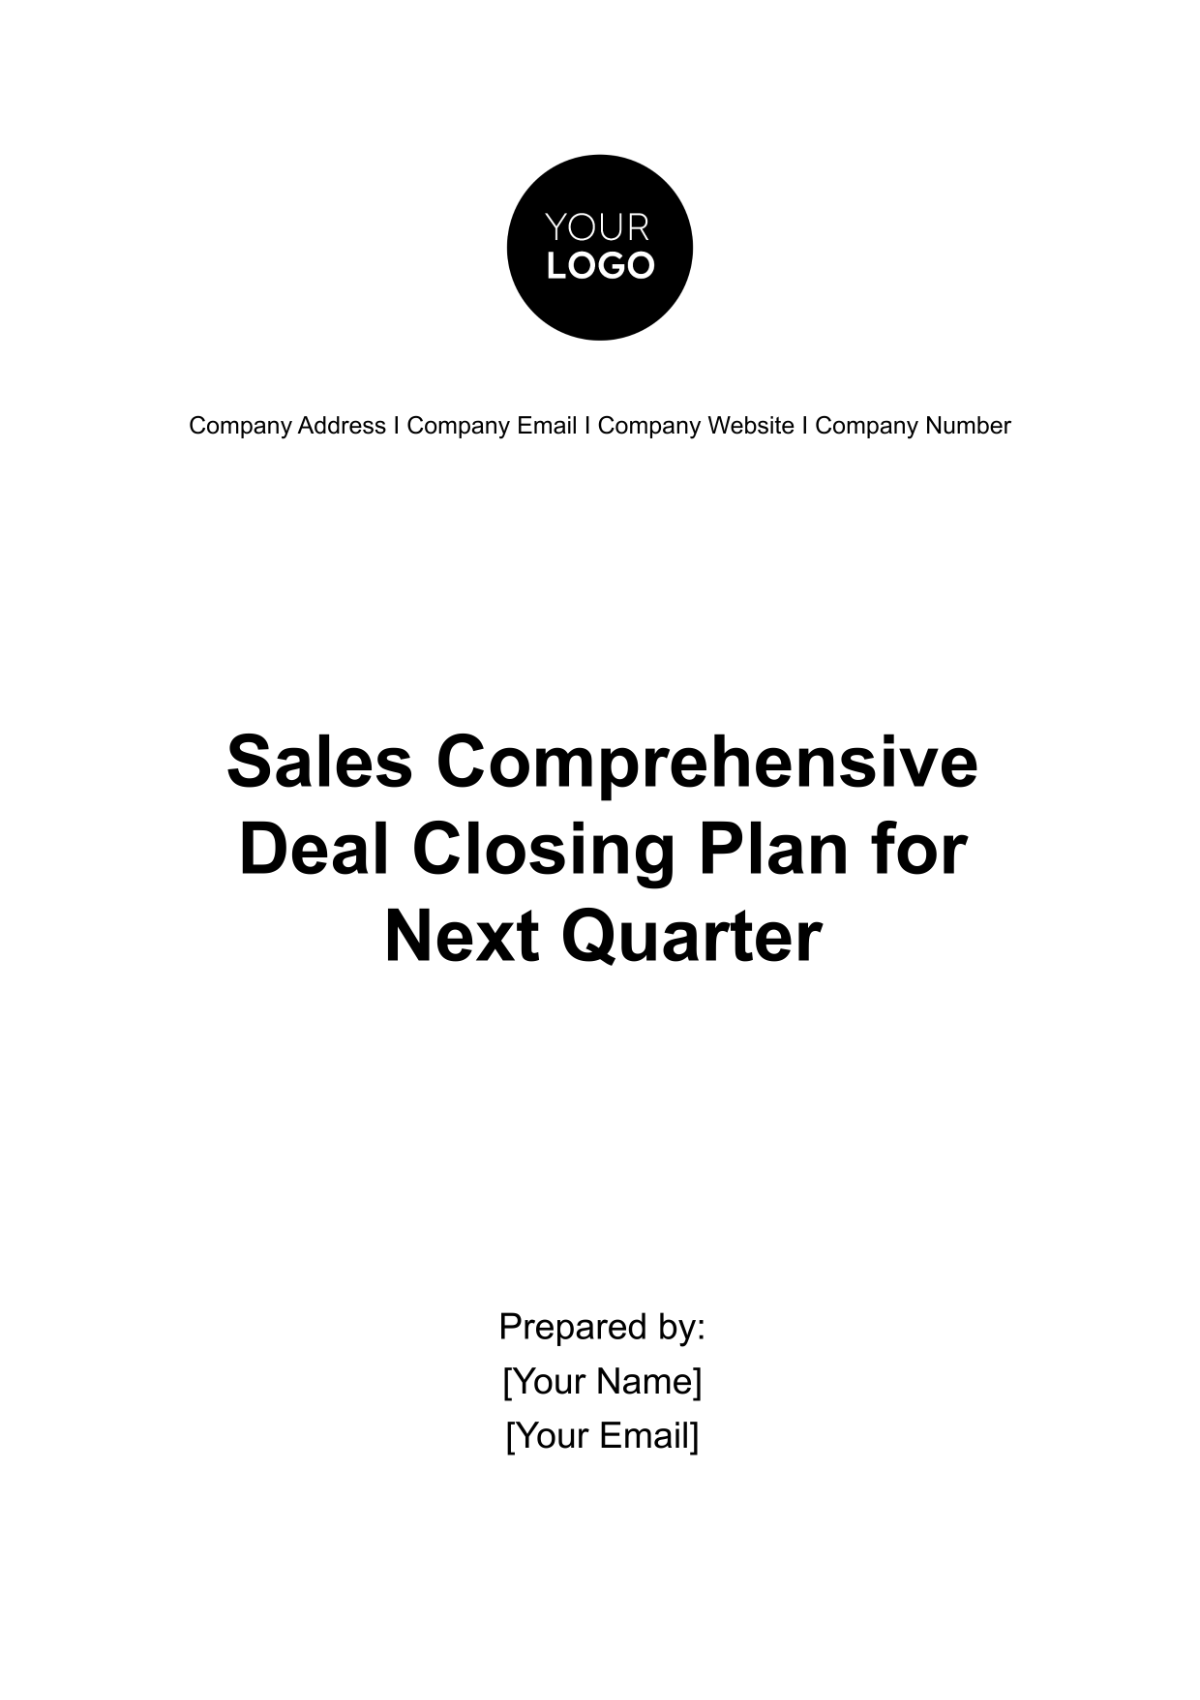 Sales Comprehensive Deal Closing Plan for Next Quarter Template